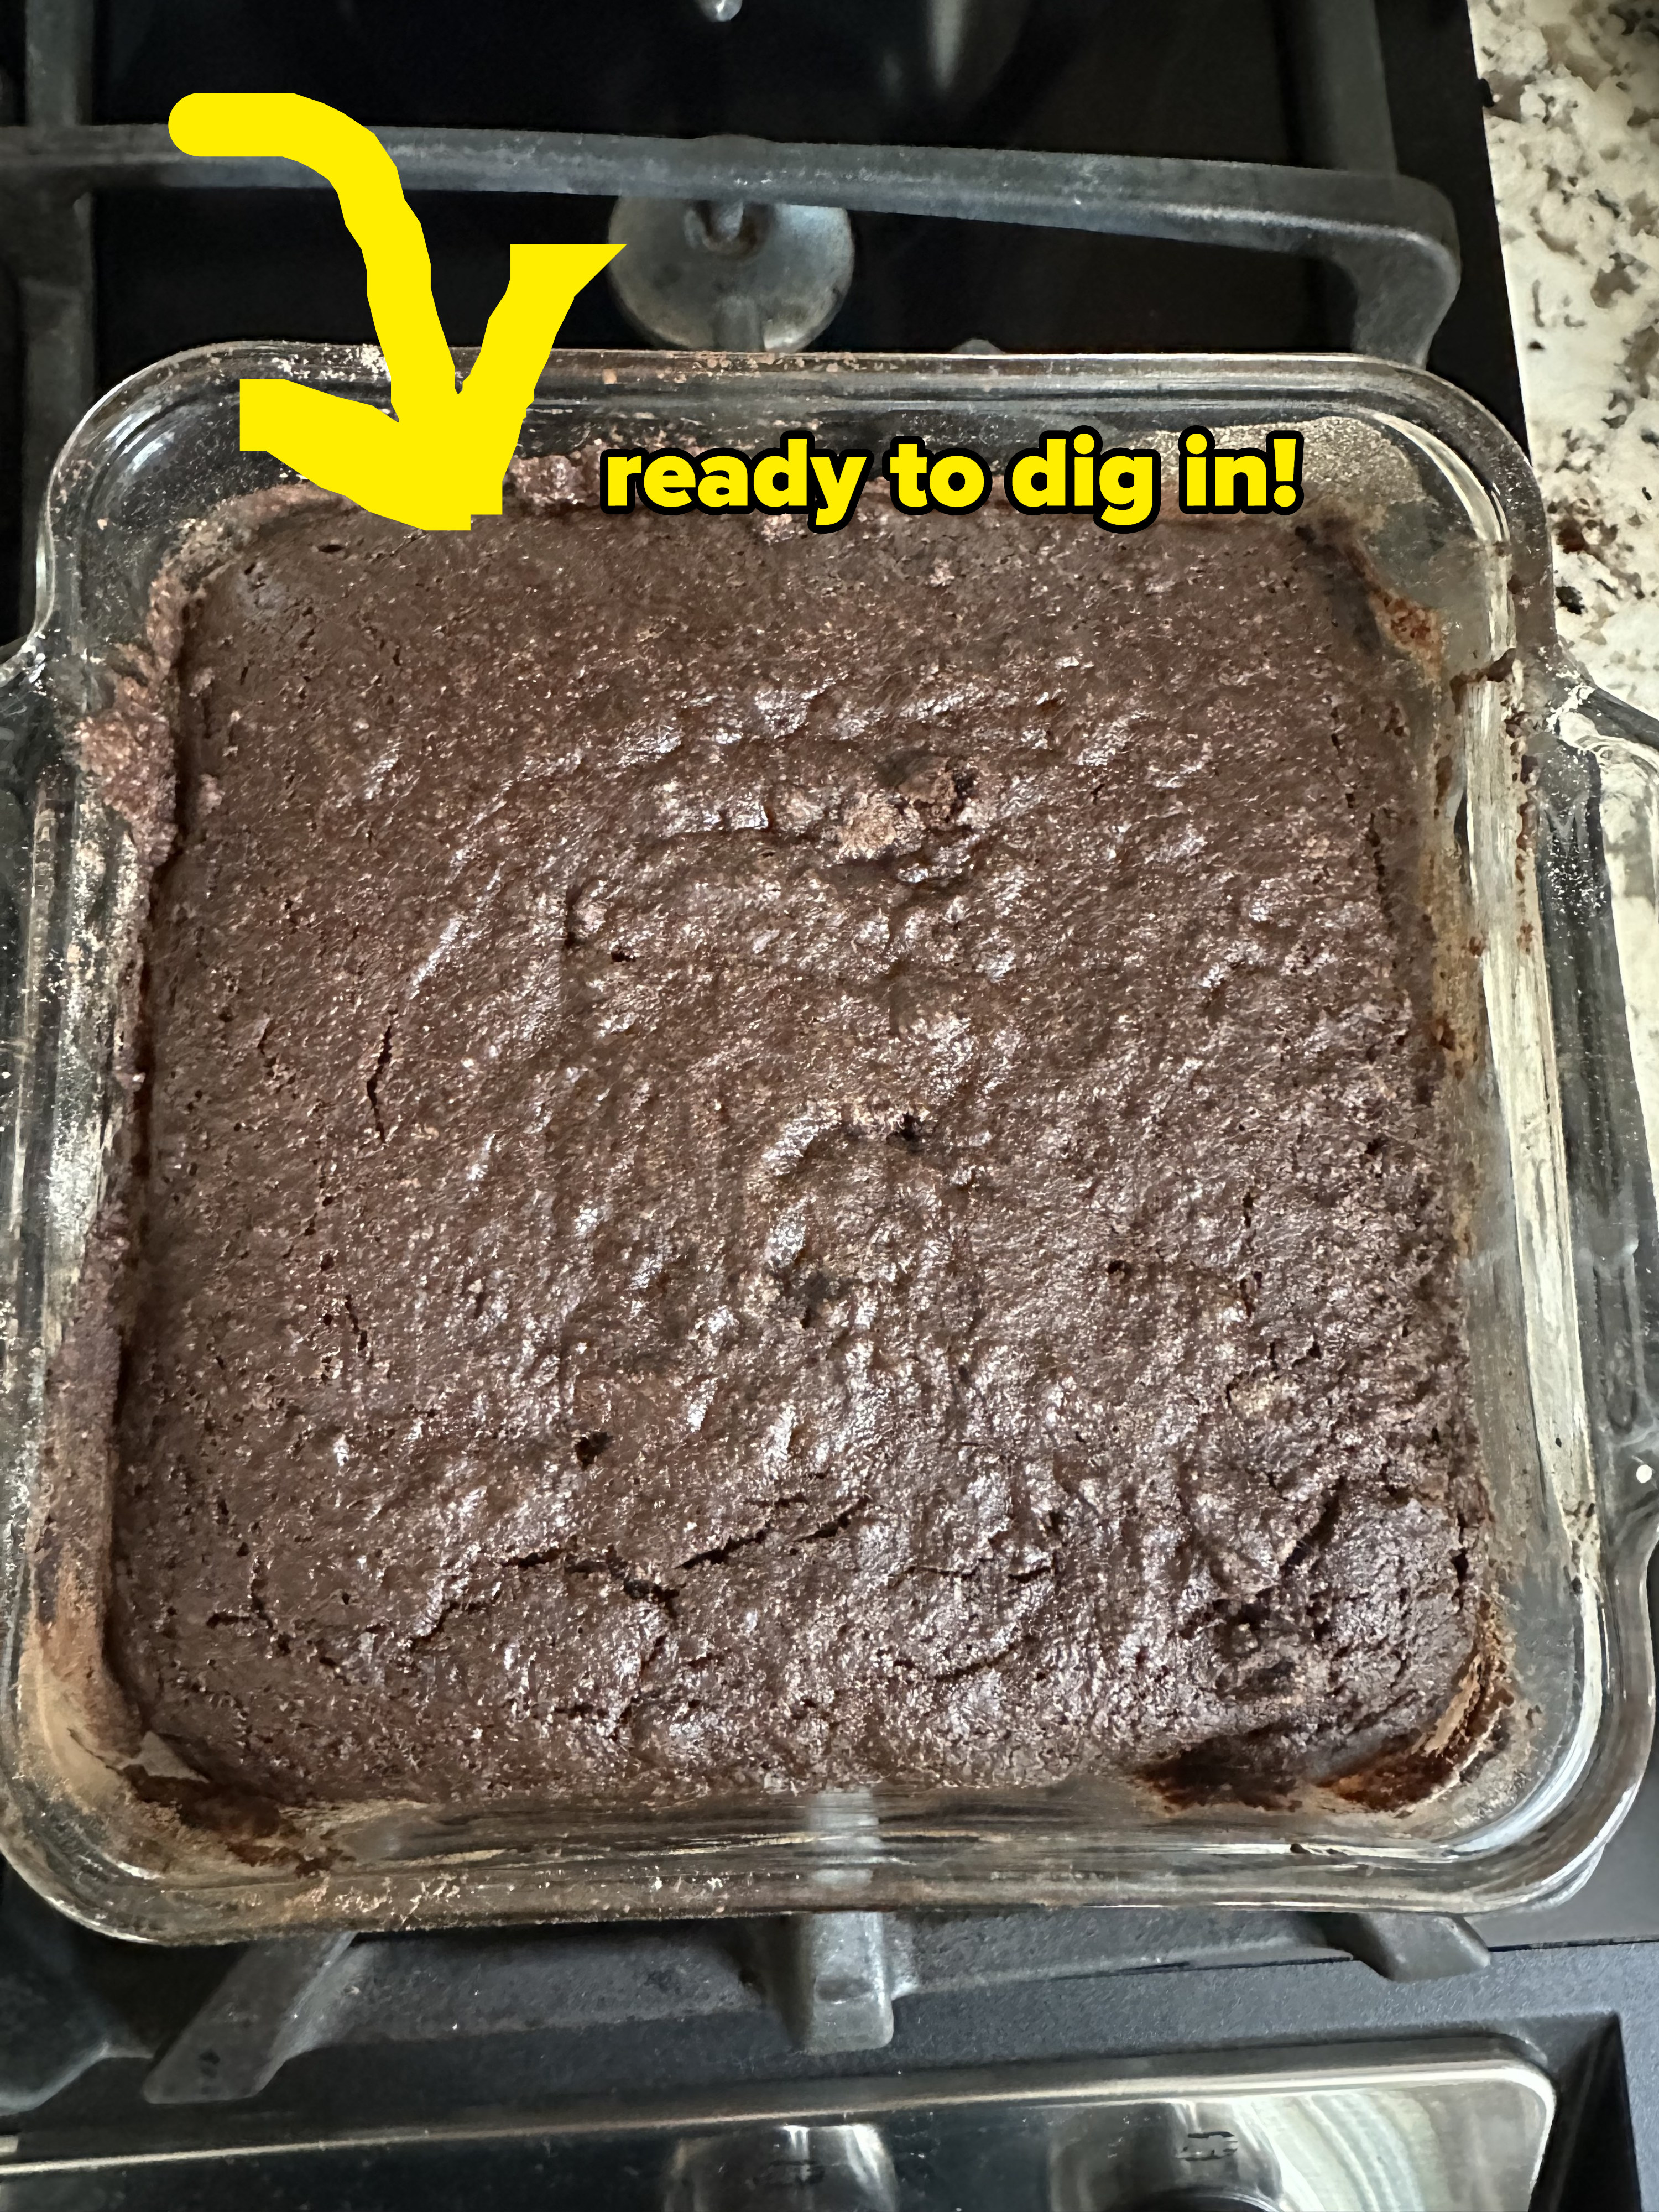 a freshly baked chocolate cake